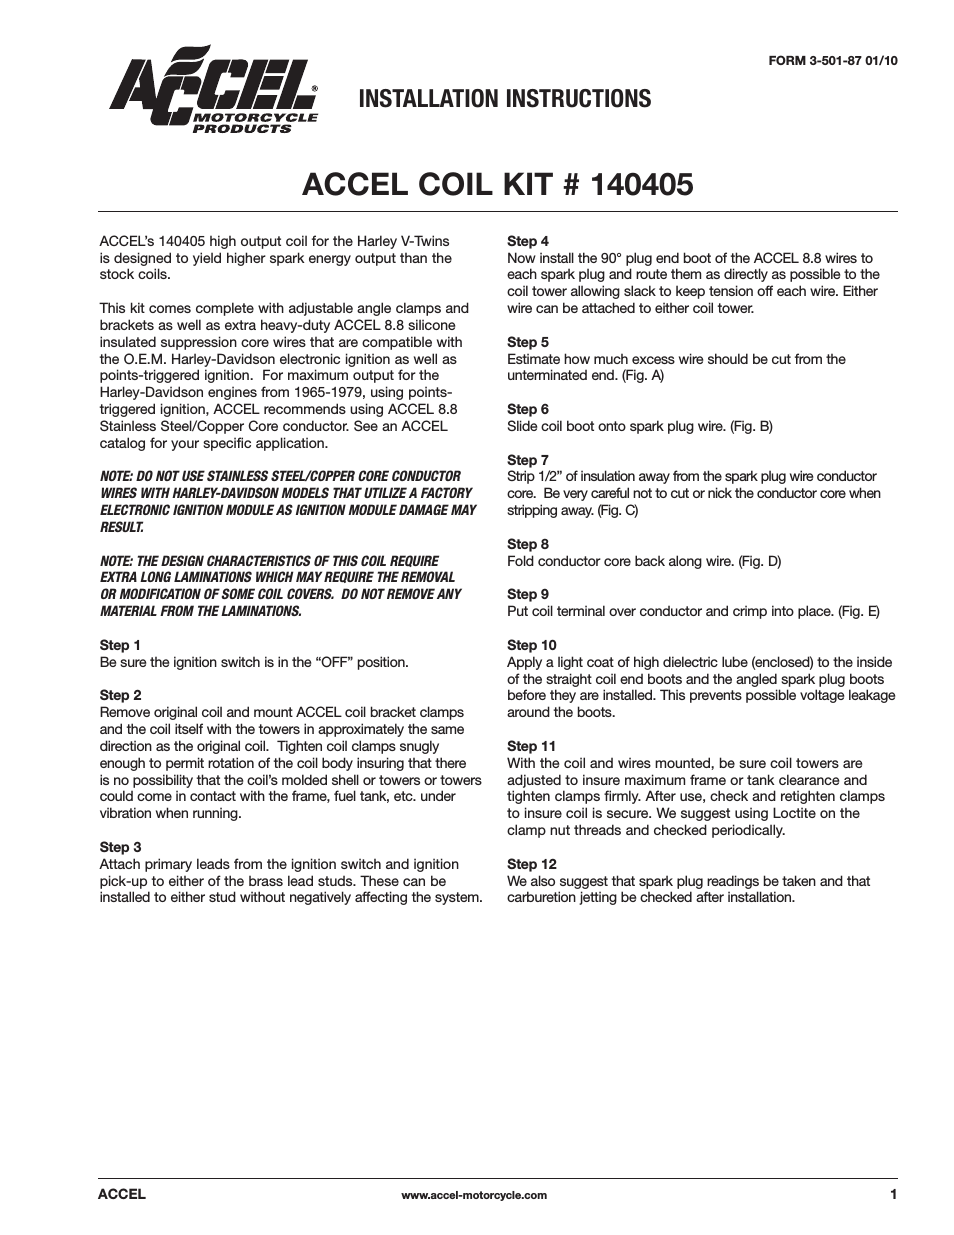 ACCEL COIL KIT 140405